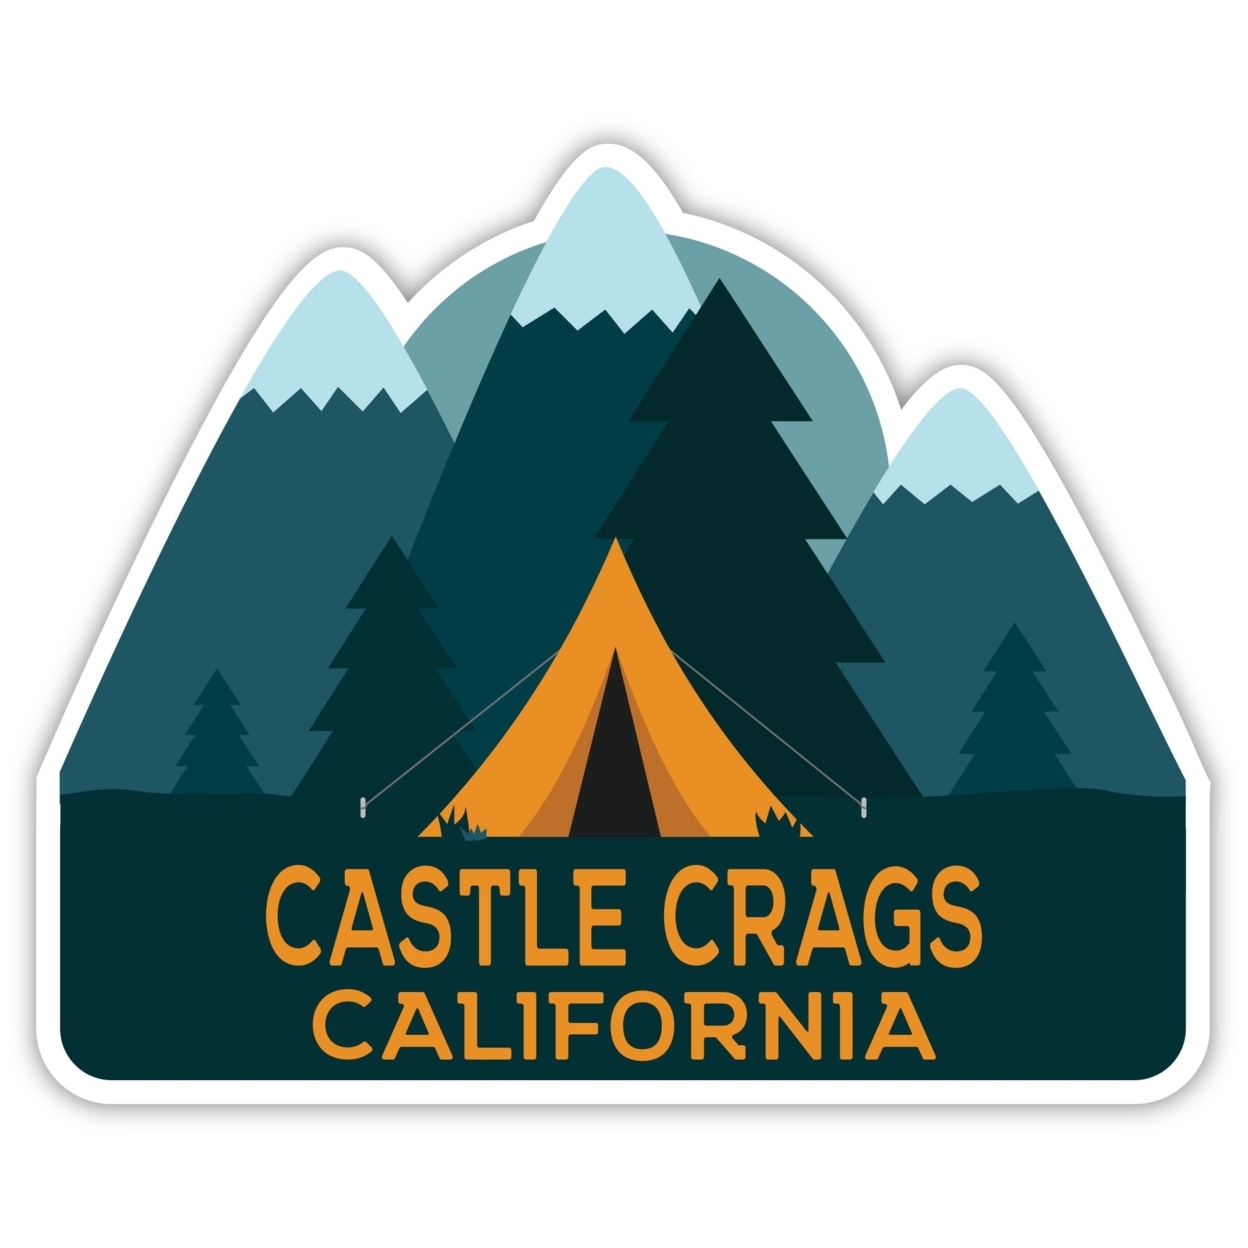 Castle Crags California Souvenir Decorative Stickers (Choose Theme And Size) - 4-Pack, 2-Inch, Tent